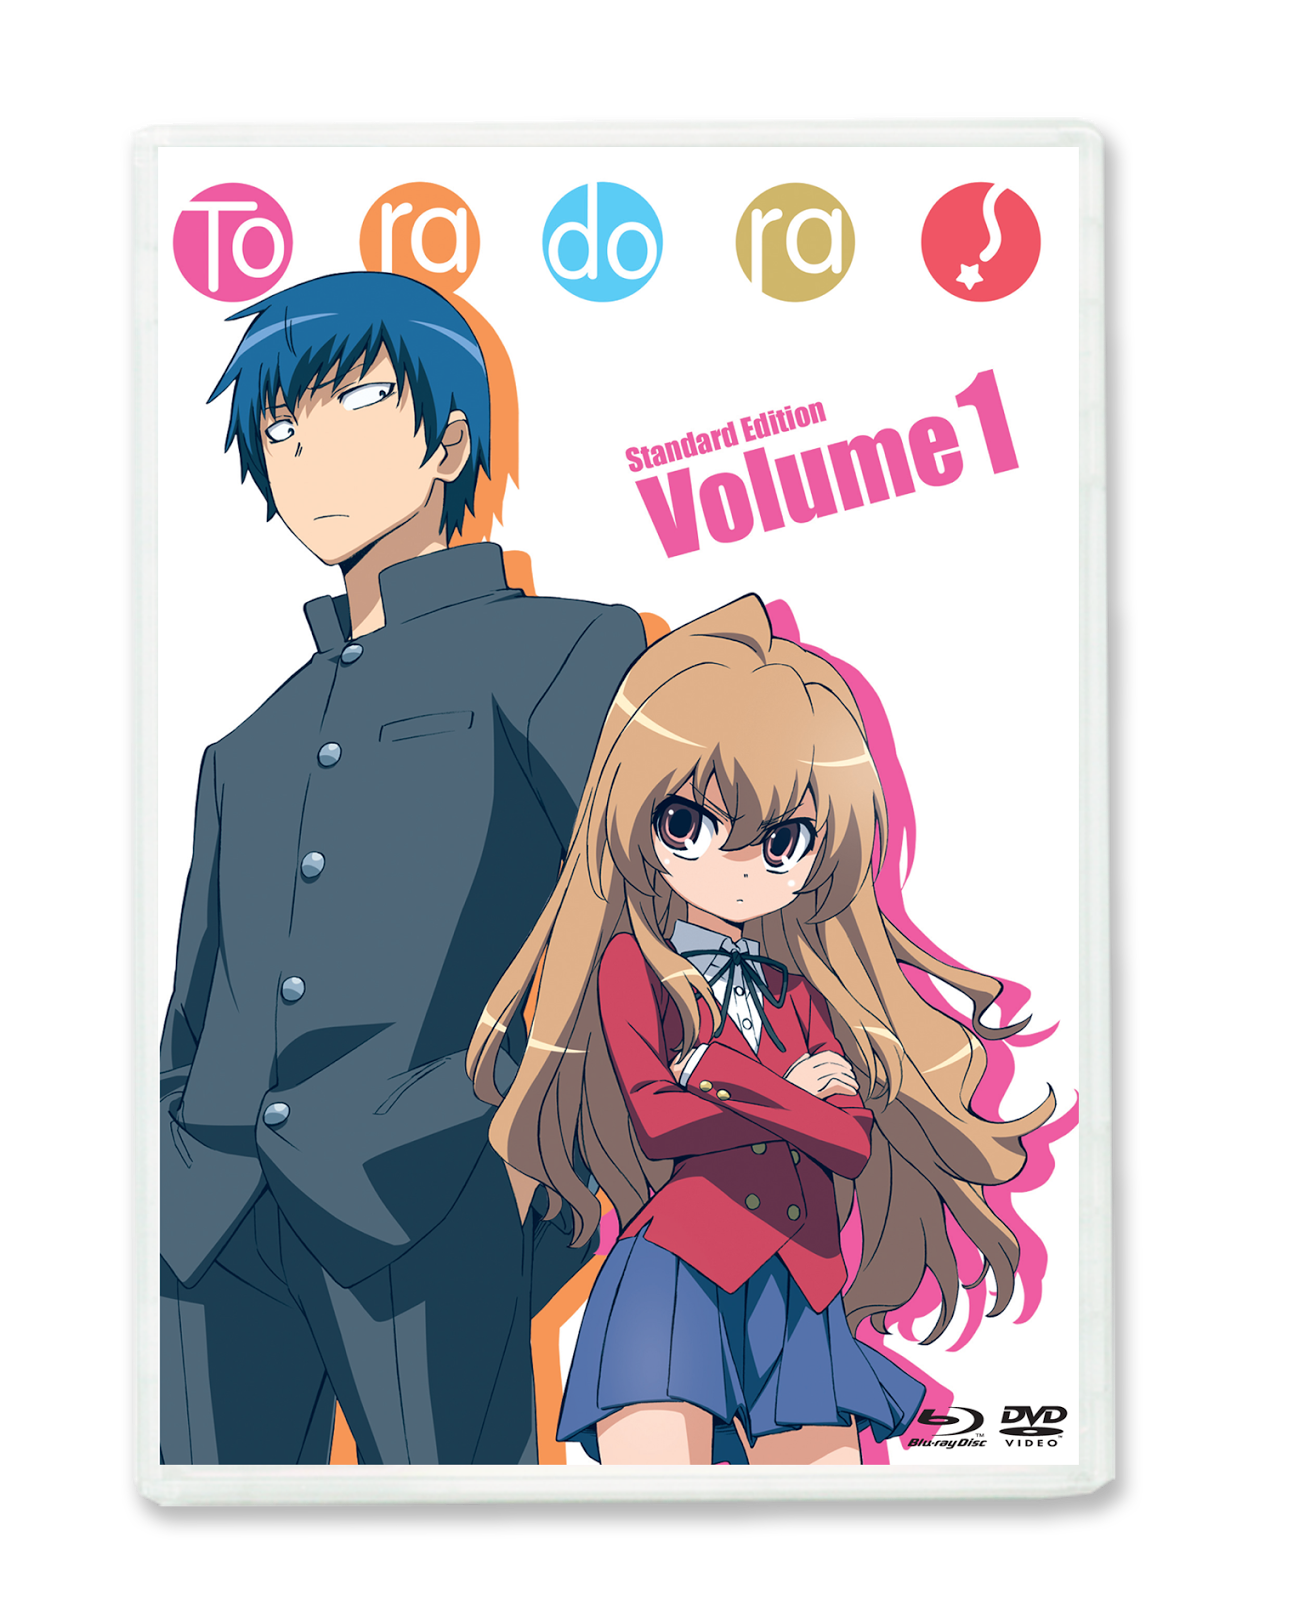 Toradora Episodes 1 - 25 + OVA English Dubbed The Complete Series Anime on  2 DVD